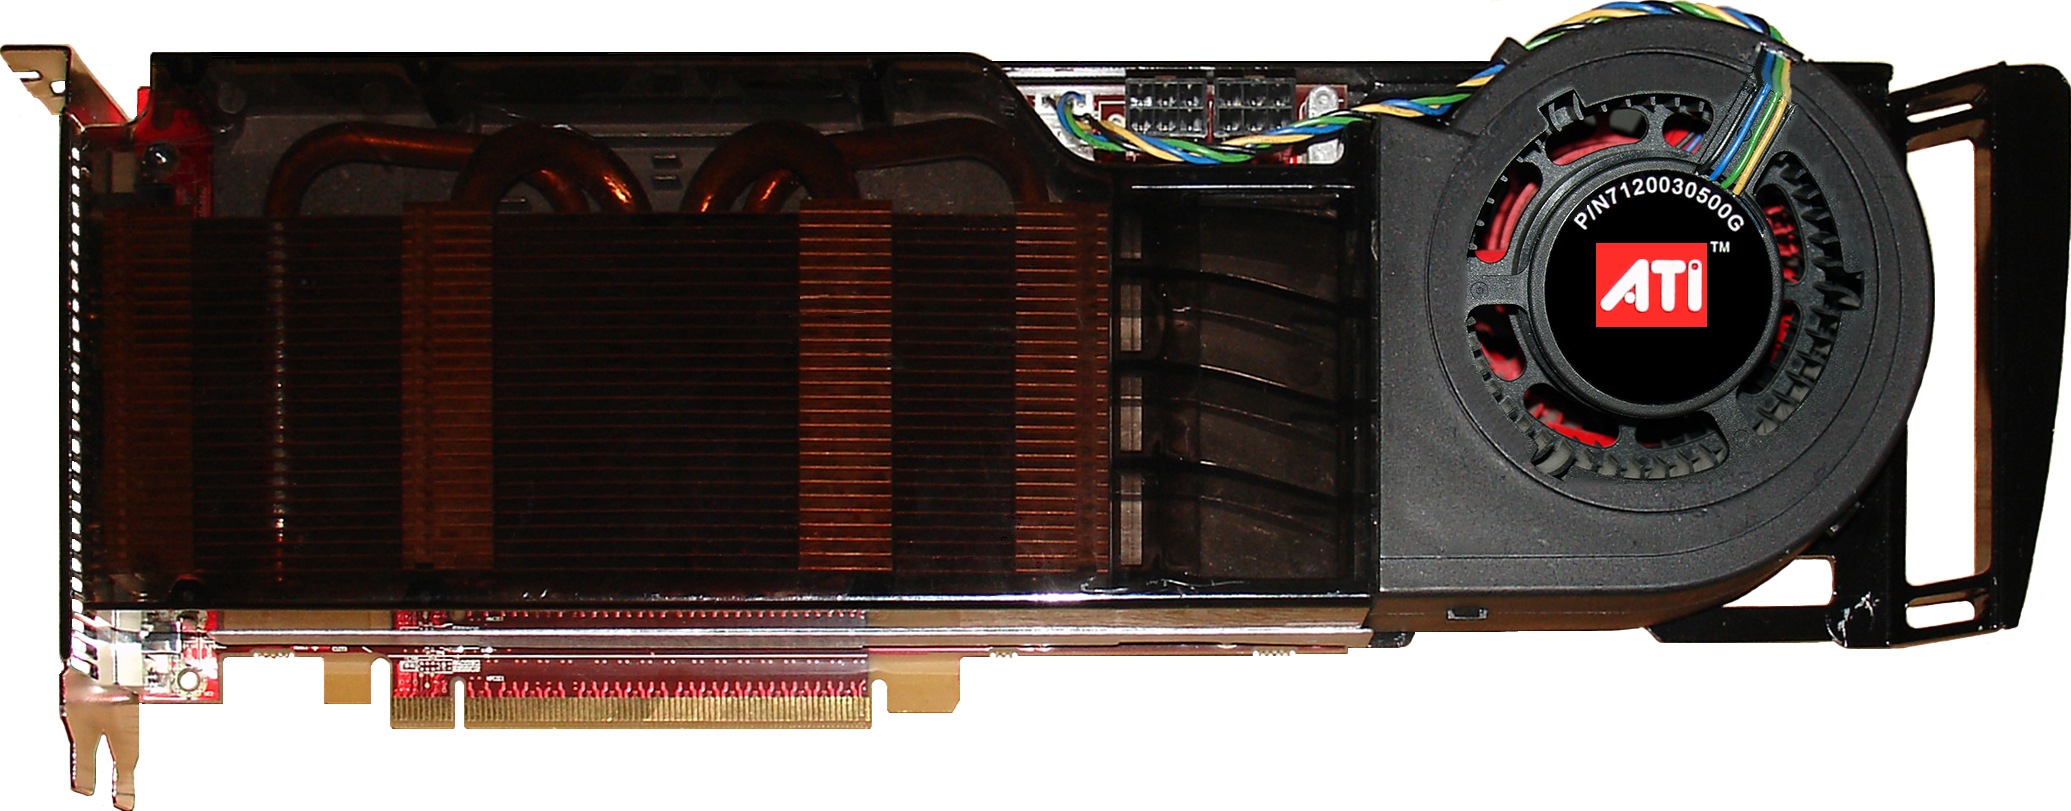 ATi Radeon HD 2900 XTX PCI-E 512MB 512Bit GDDR3 Rev_A0 0639 Engineering Sample top (1)1.jpg